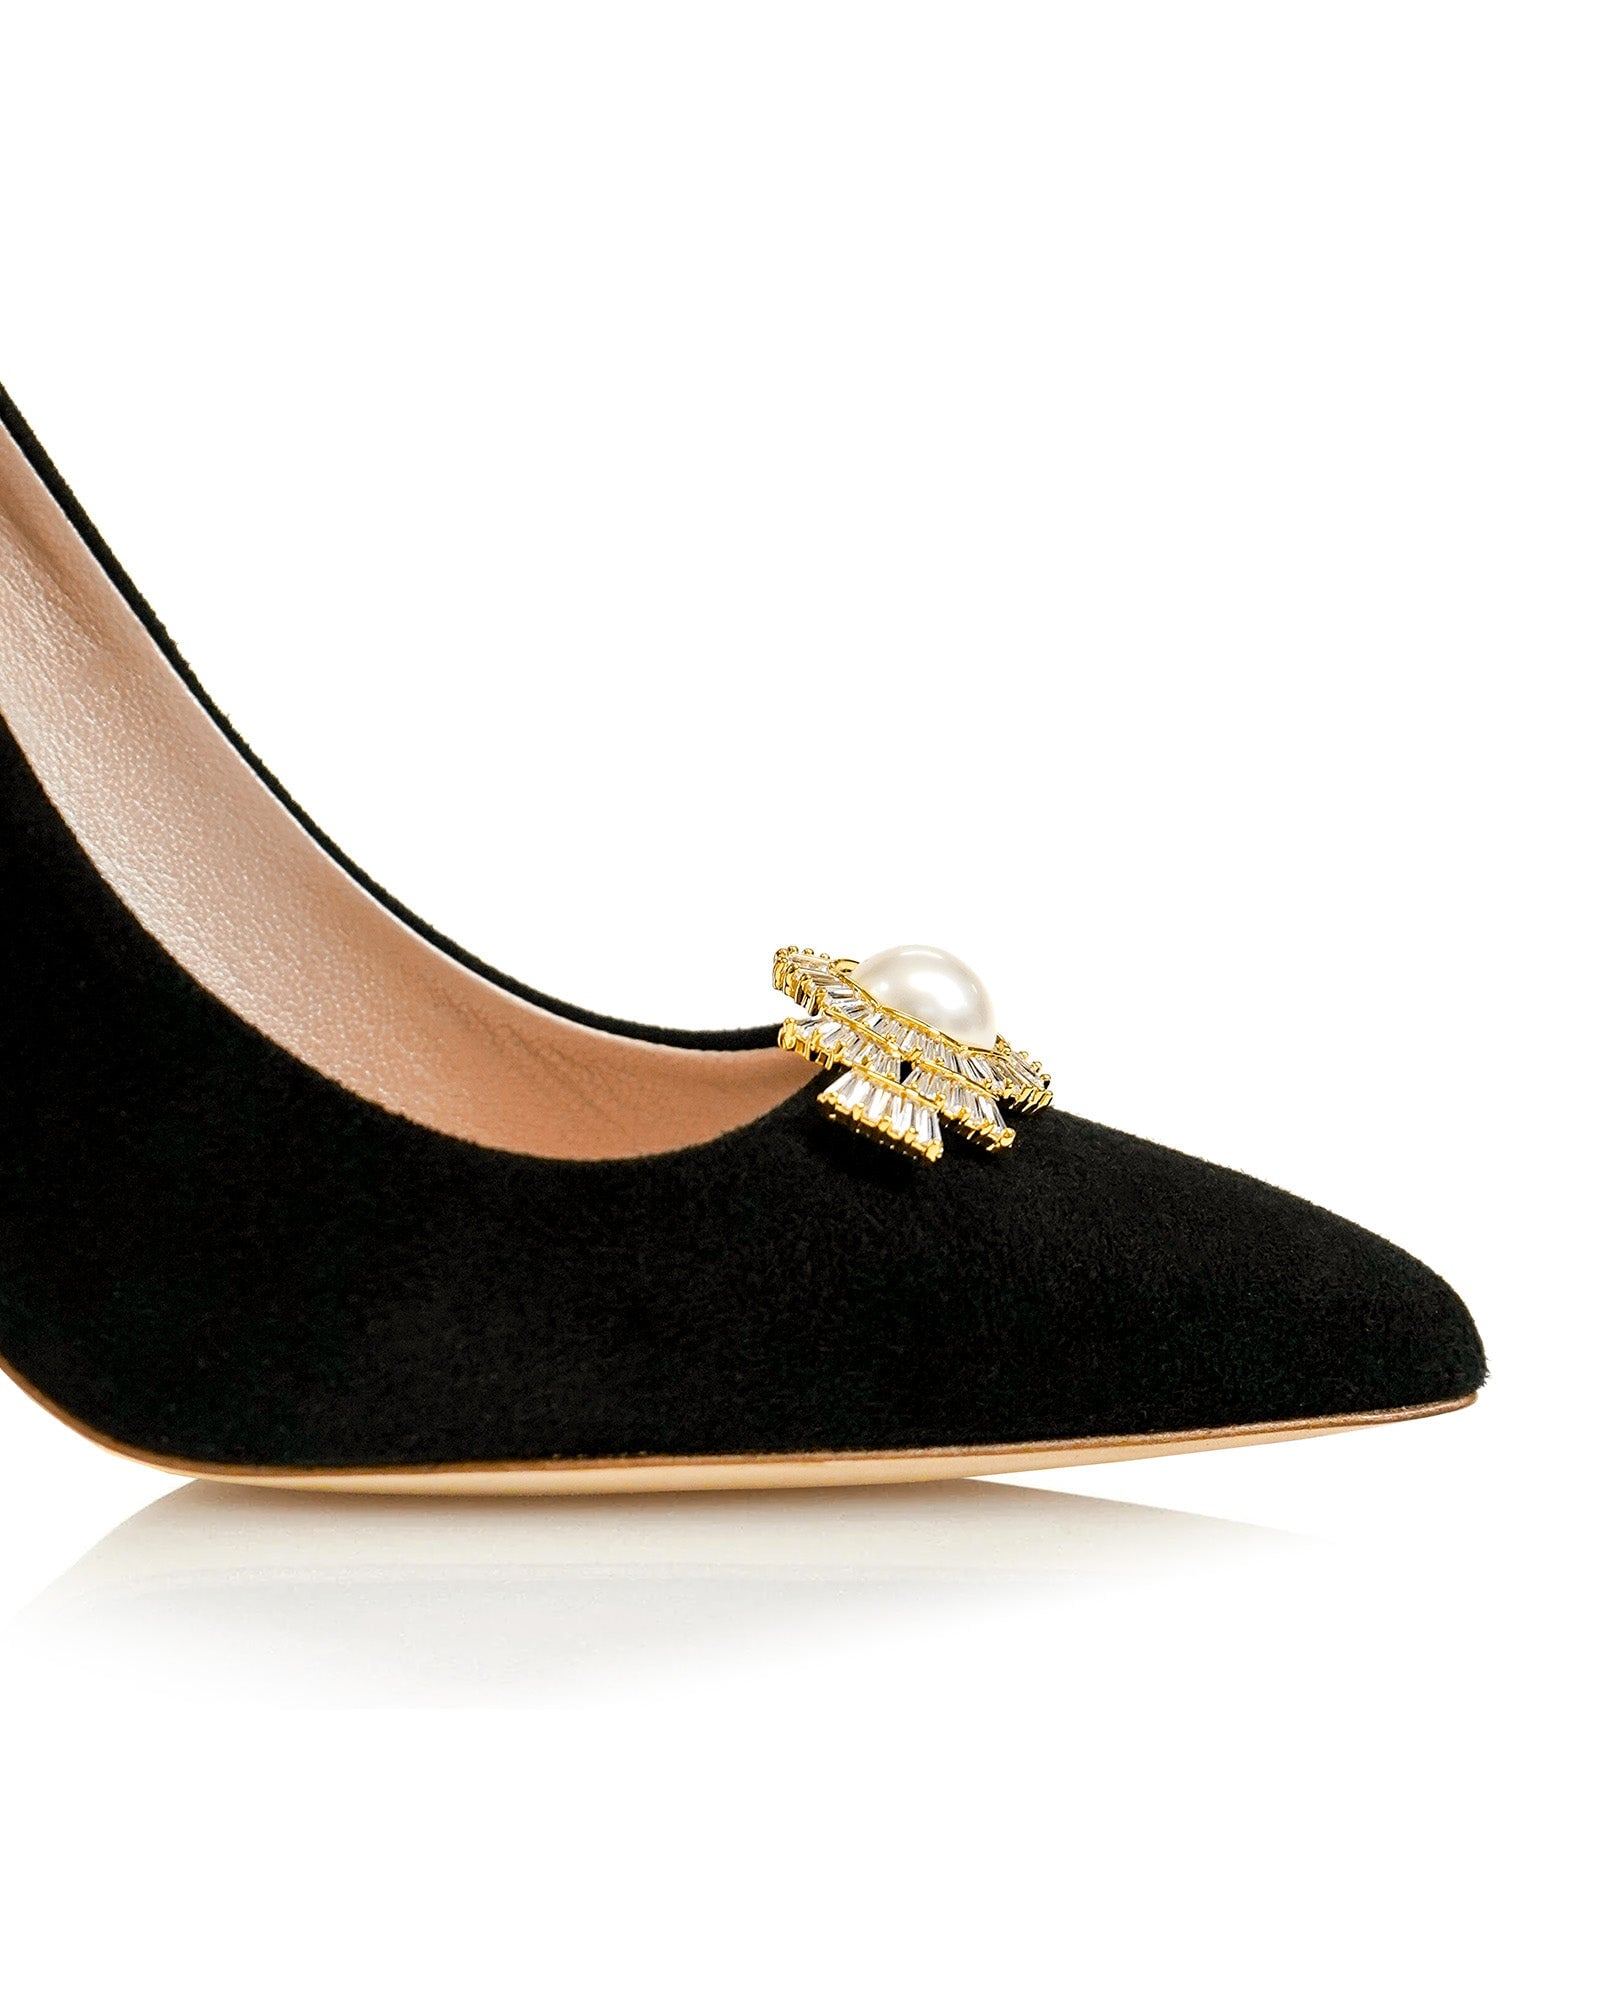 Duchess Pearl Shoe Clips Shoe Clip Emmy London  image